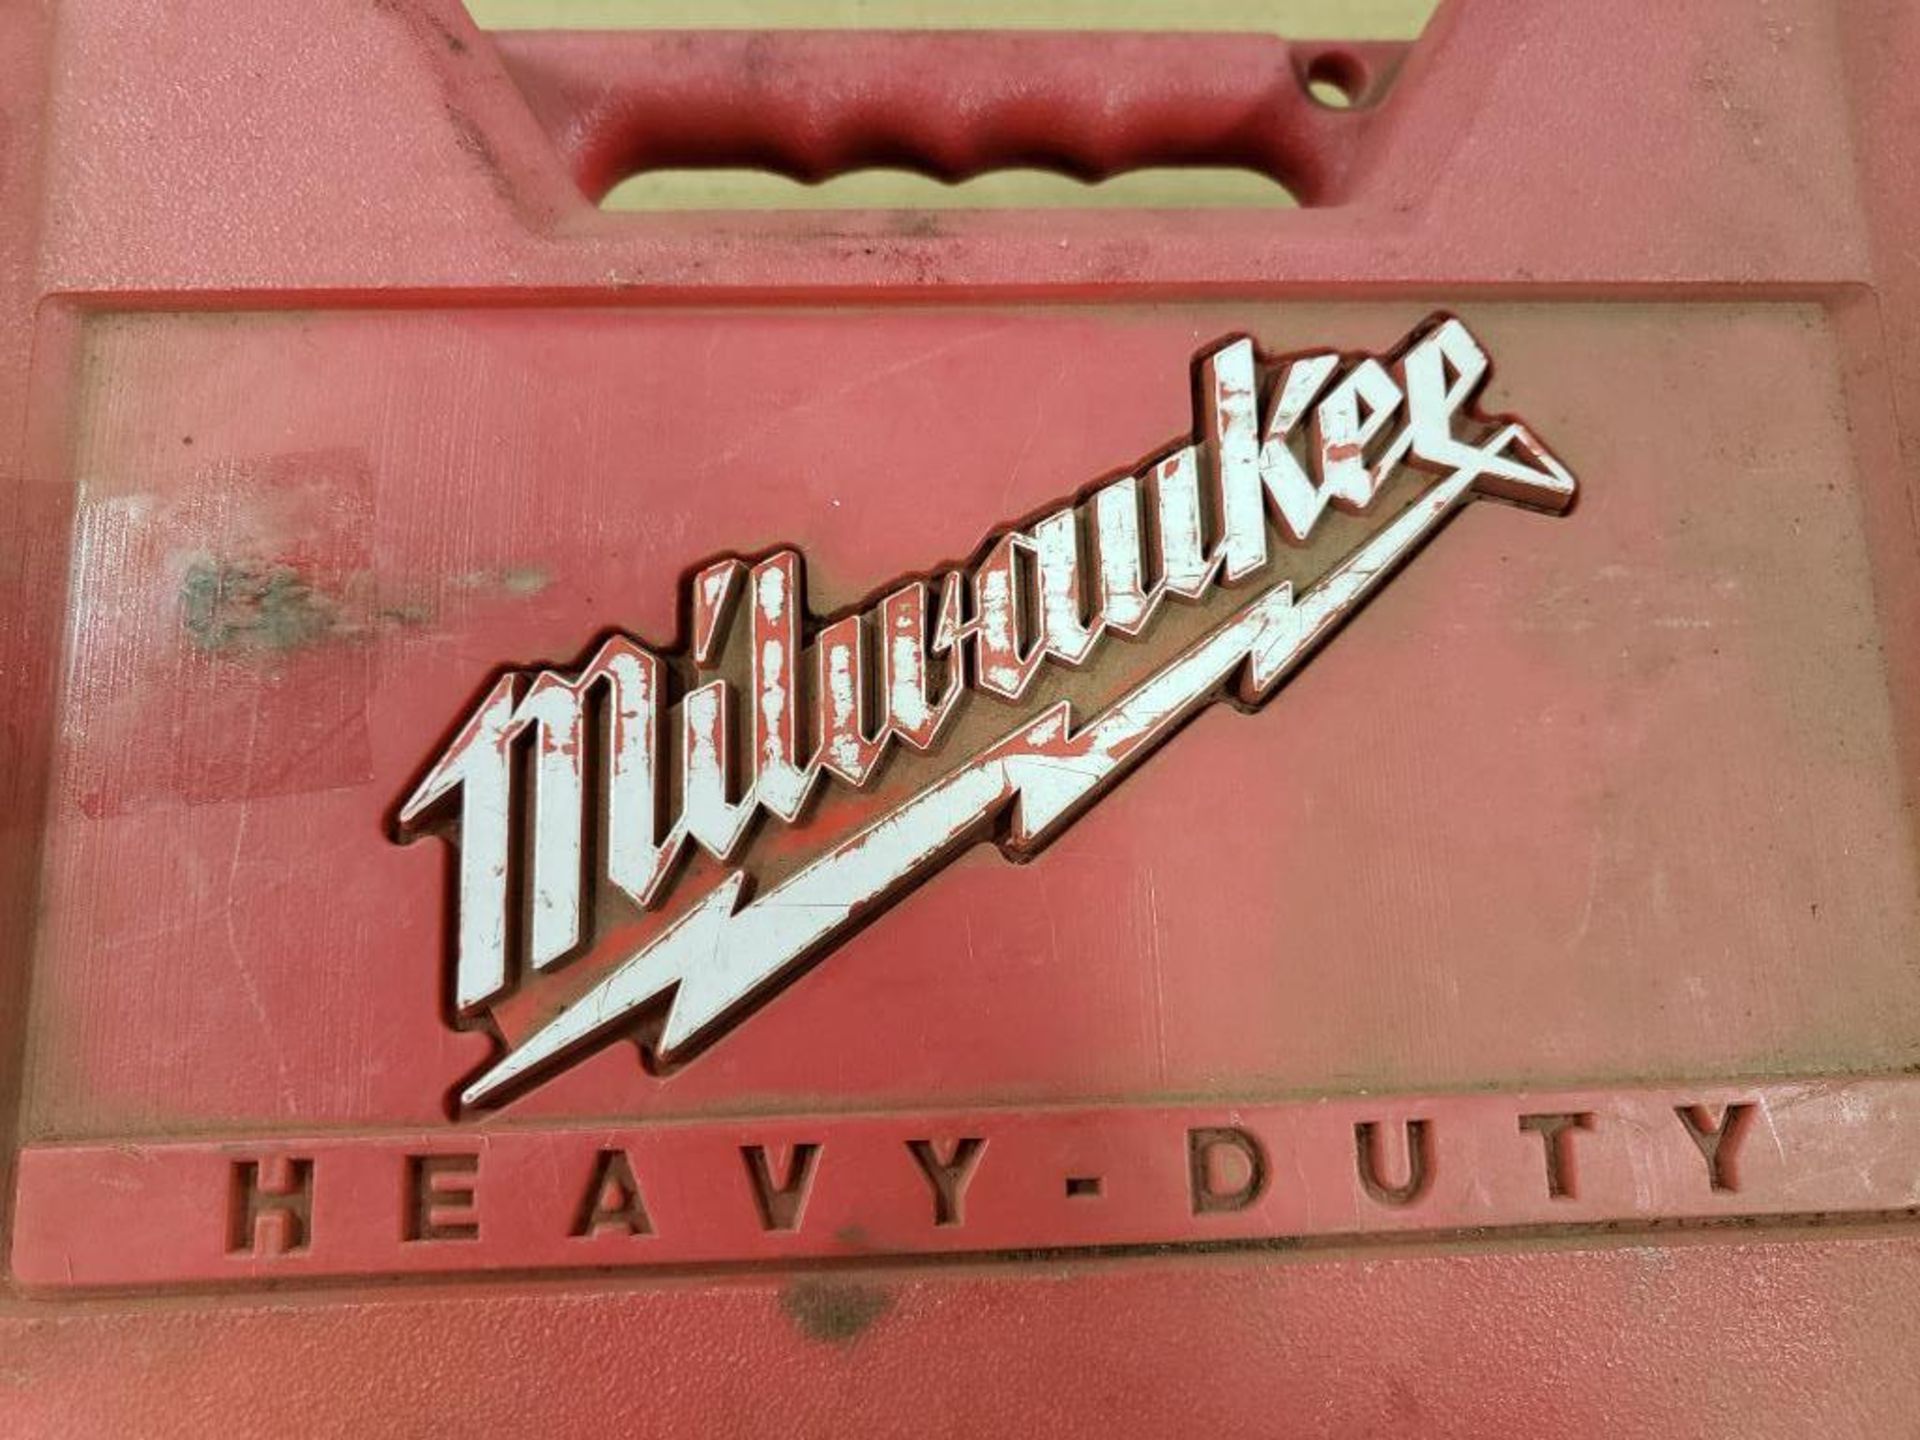 Milwaukee 6508 Sawzall reciprocating saw. - Image 3 of 6